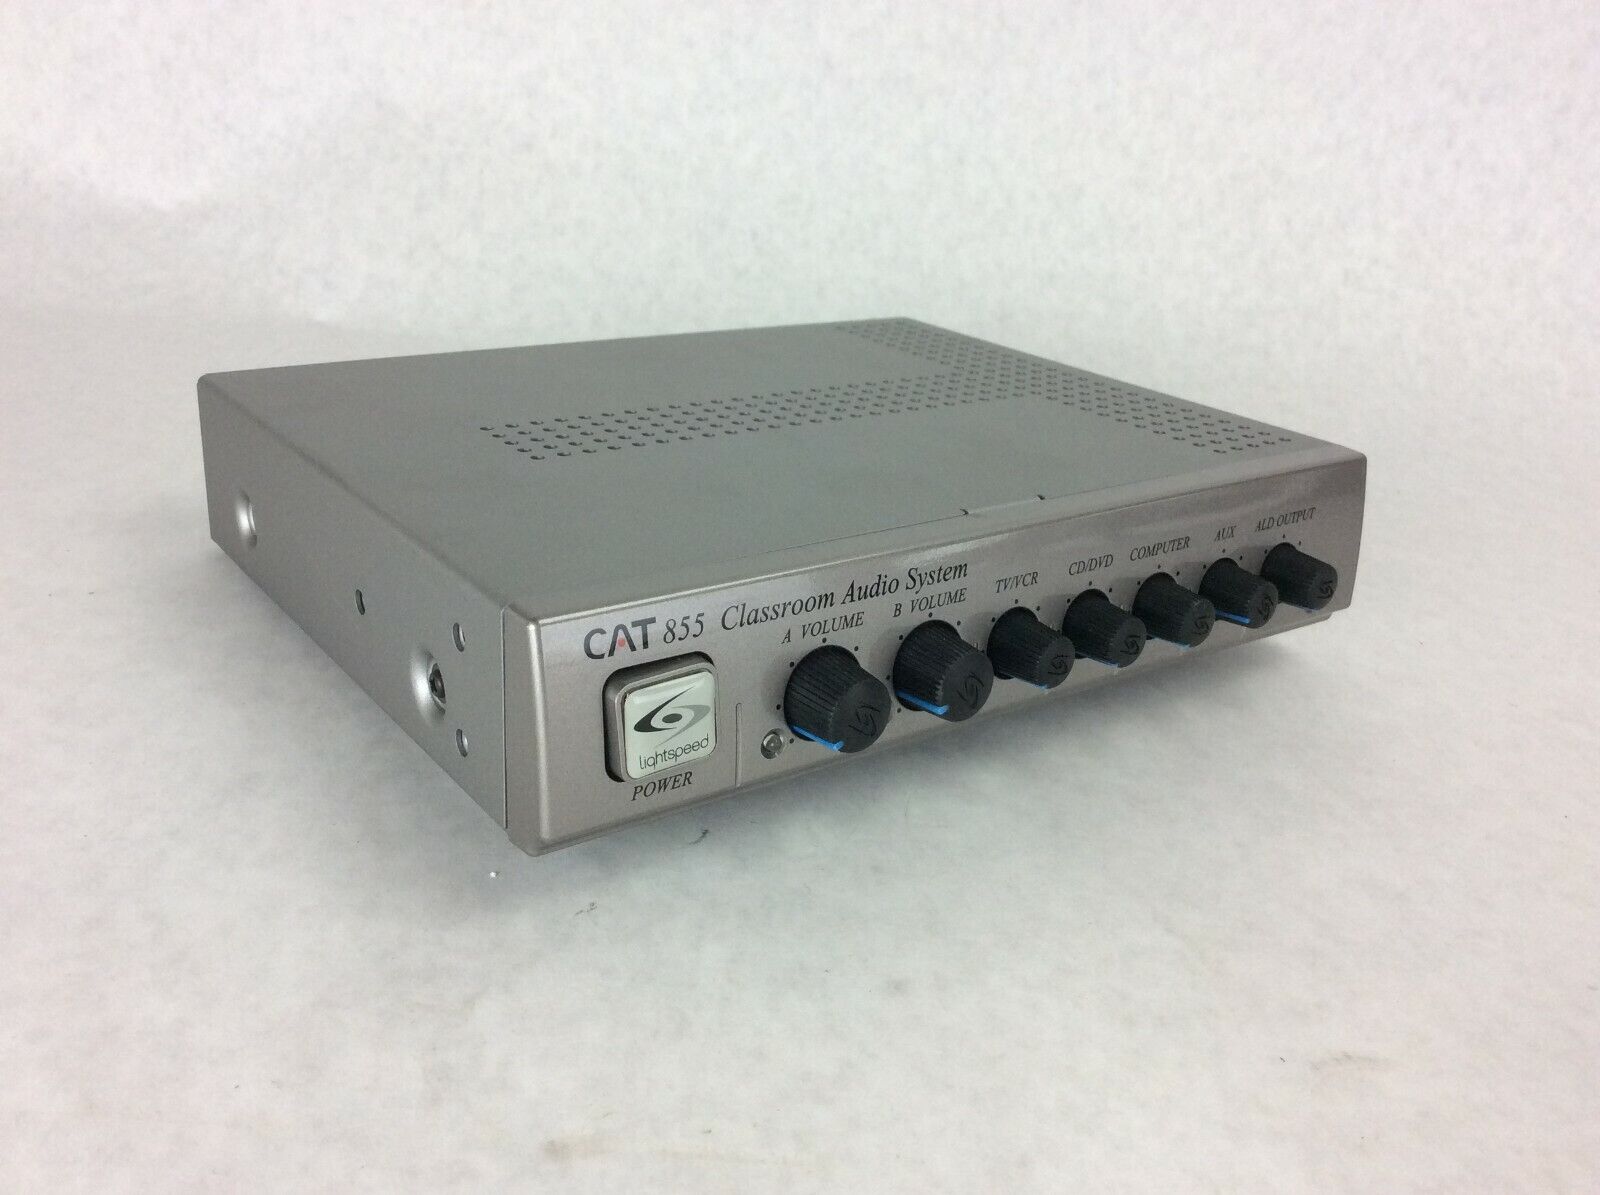 Lightspeed AMP-855 CAT855 Classroom Audio System - Tested